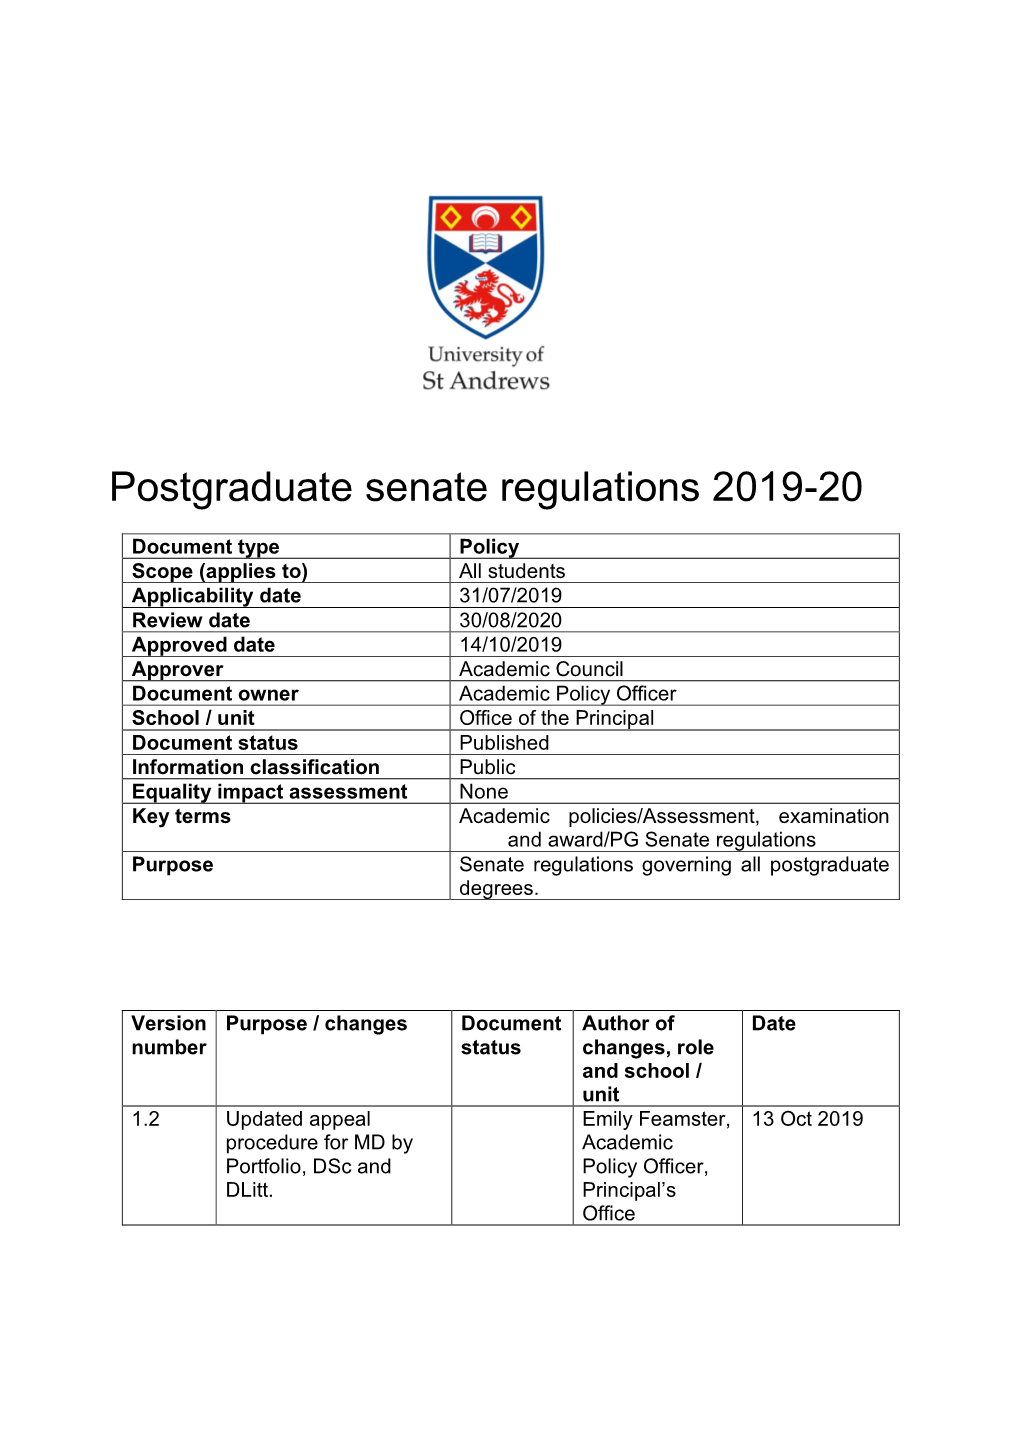 Postgraduate Senate Regulations 2019-20